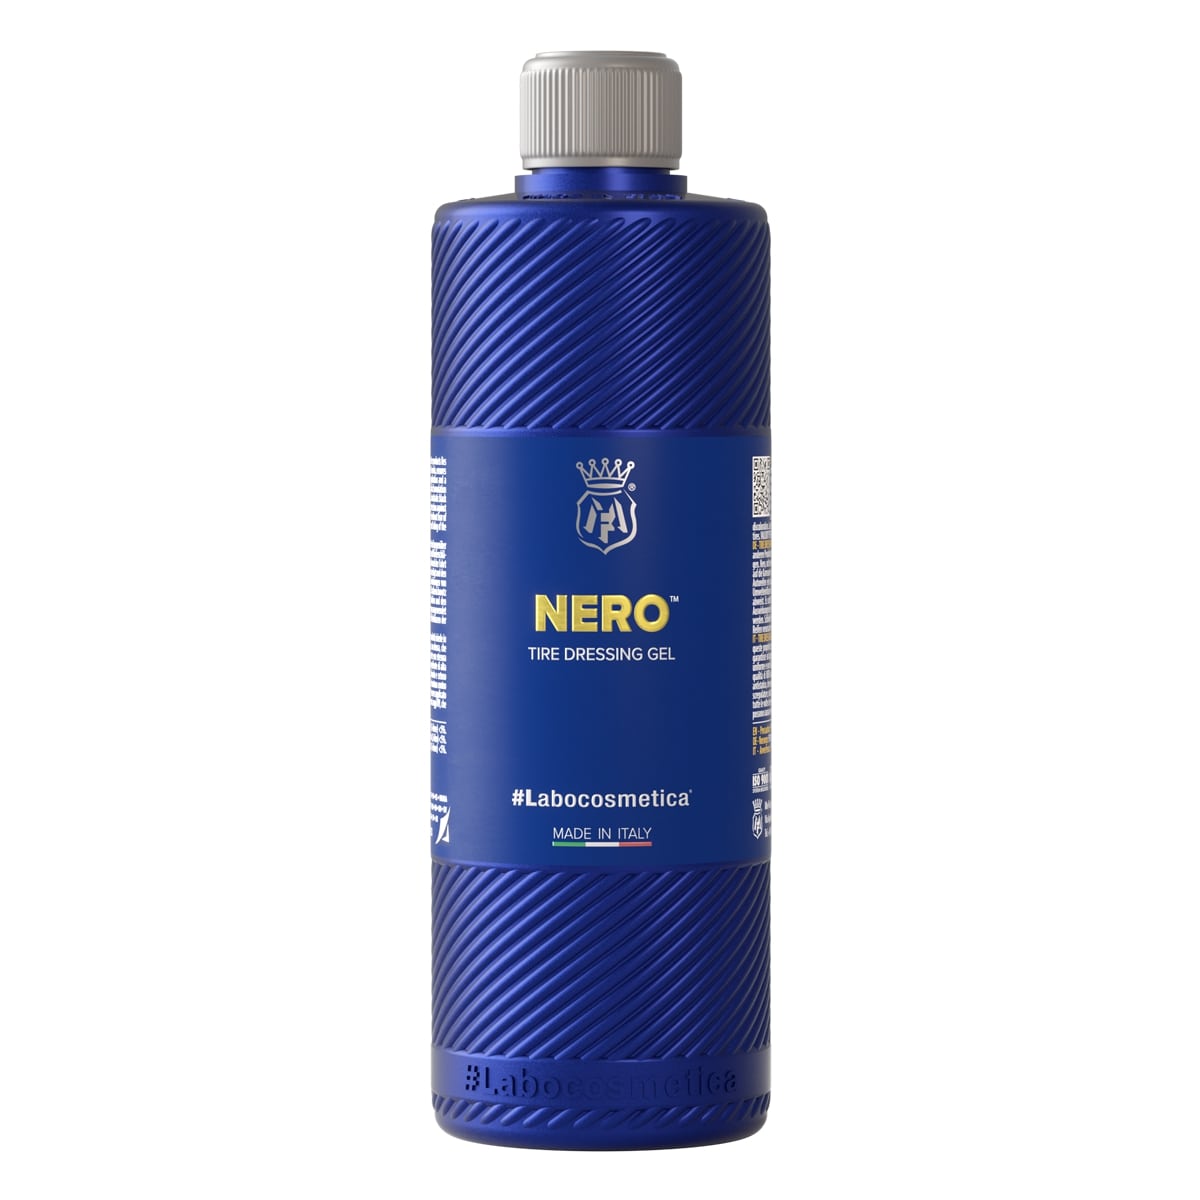 Labocosmetica #Nero (Tire Dressing Gel) 500ml